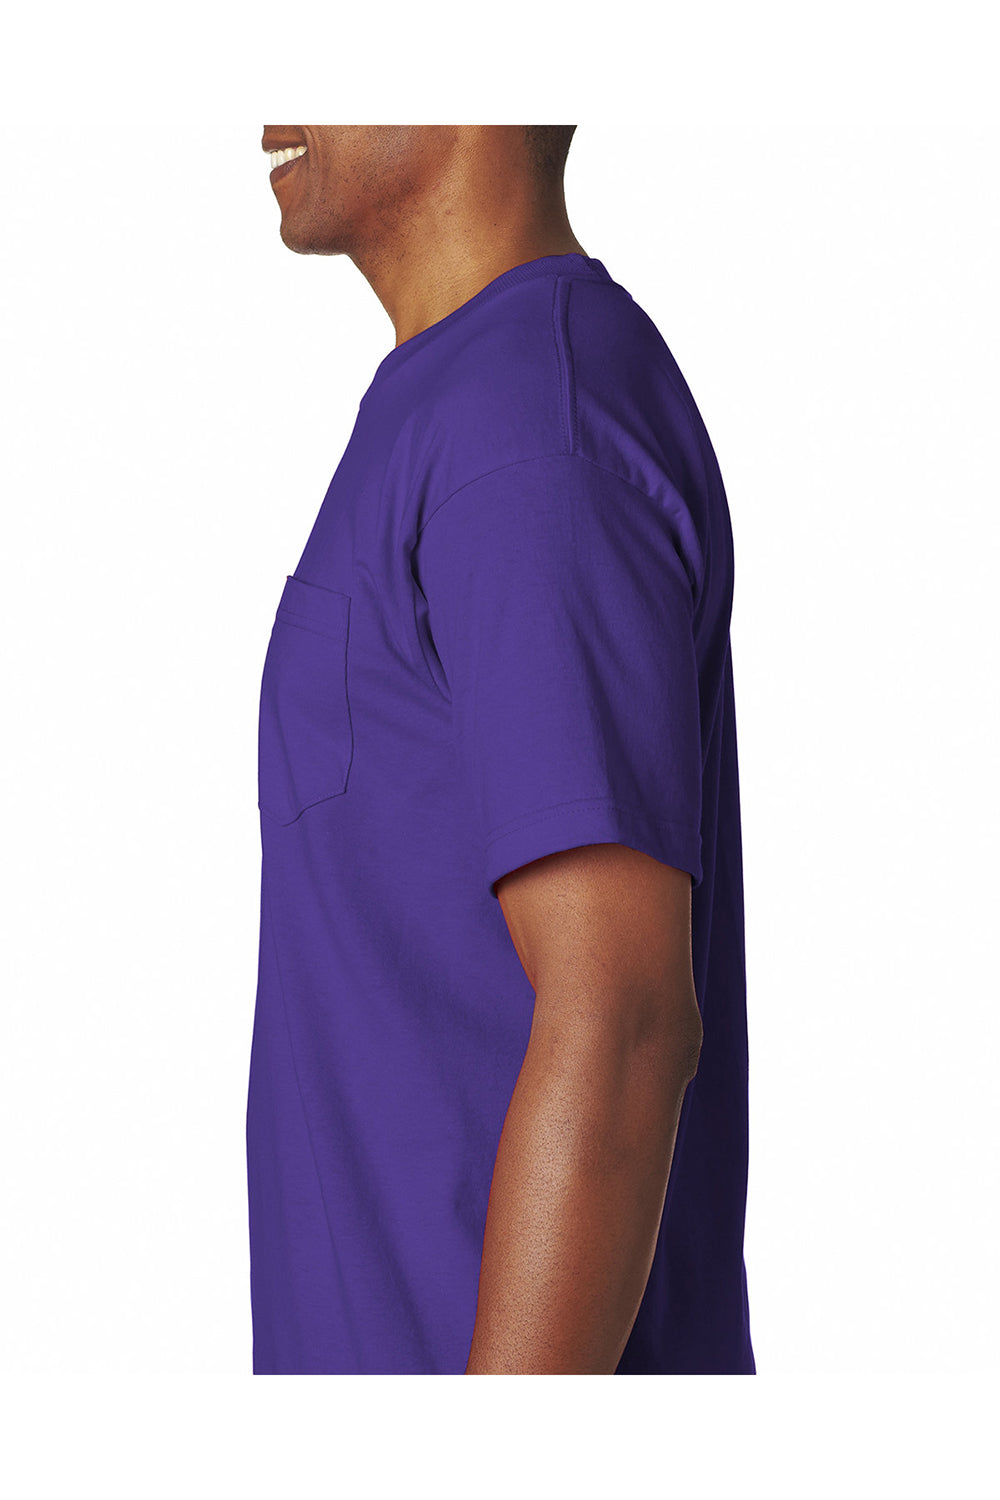 Bayside BA7100 Mens USA Made Short Sleeve Crewneck T-Shirt w/ Pocket Purple Model Side